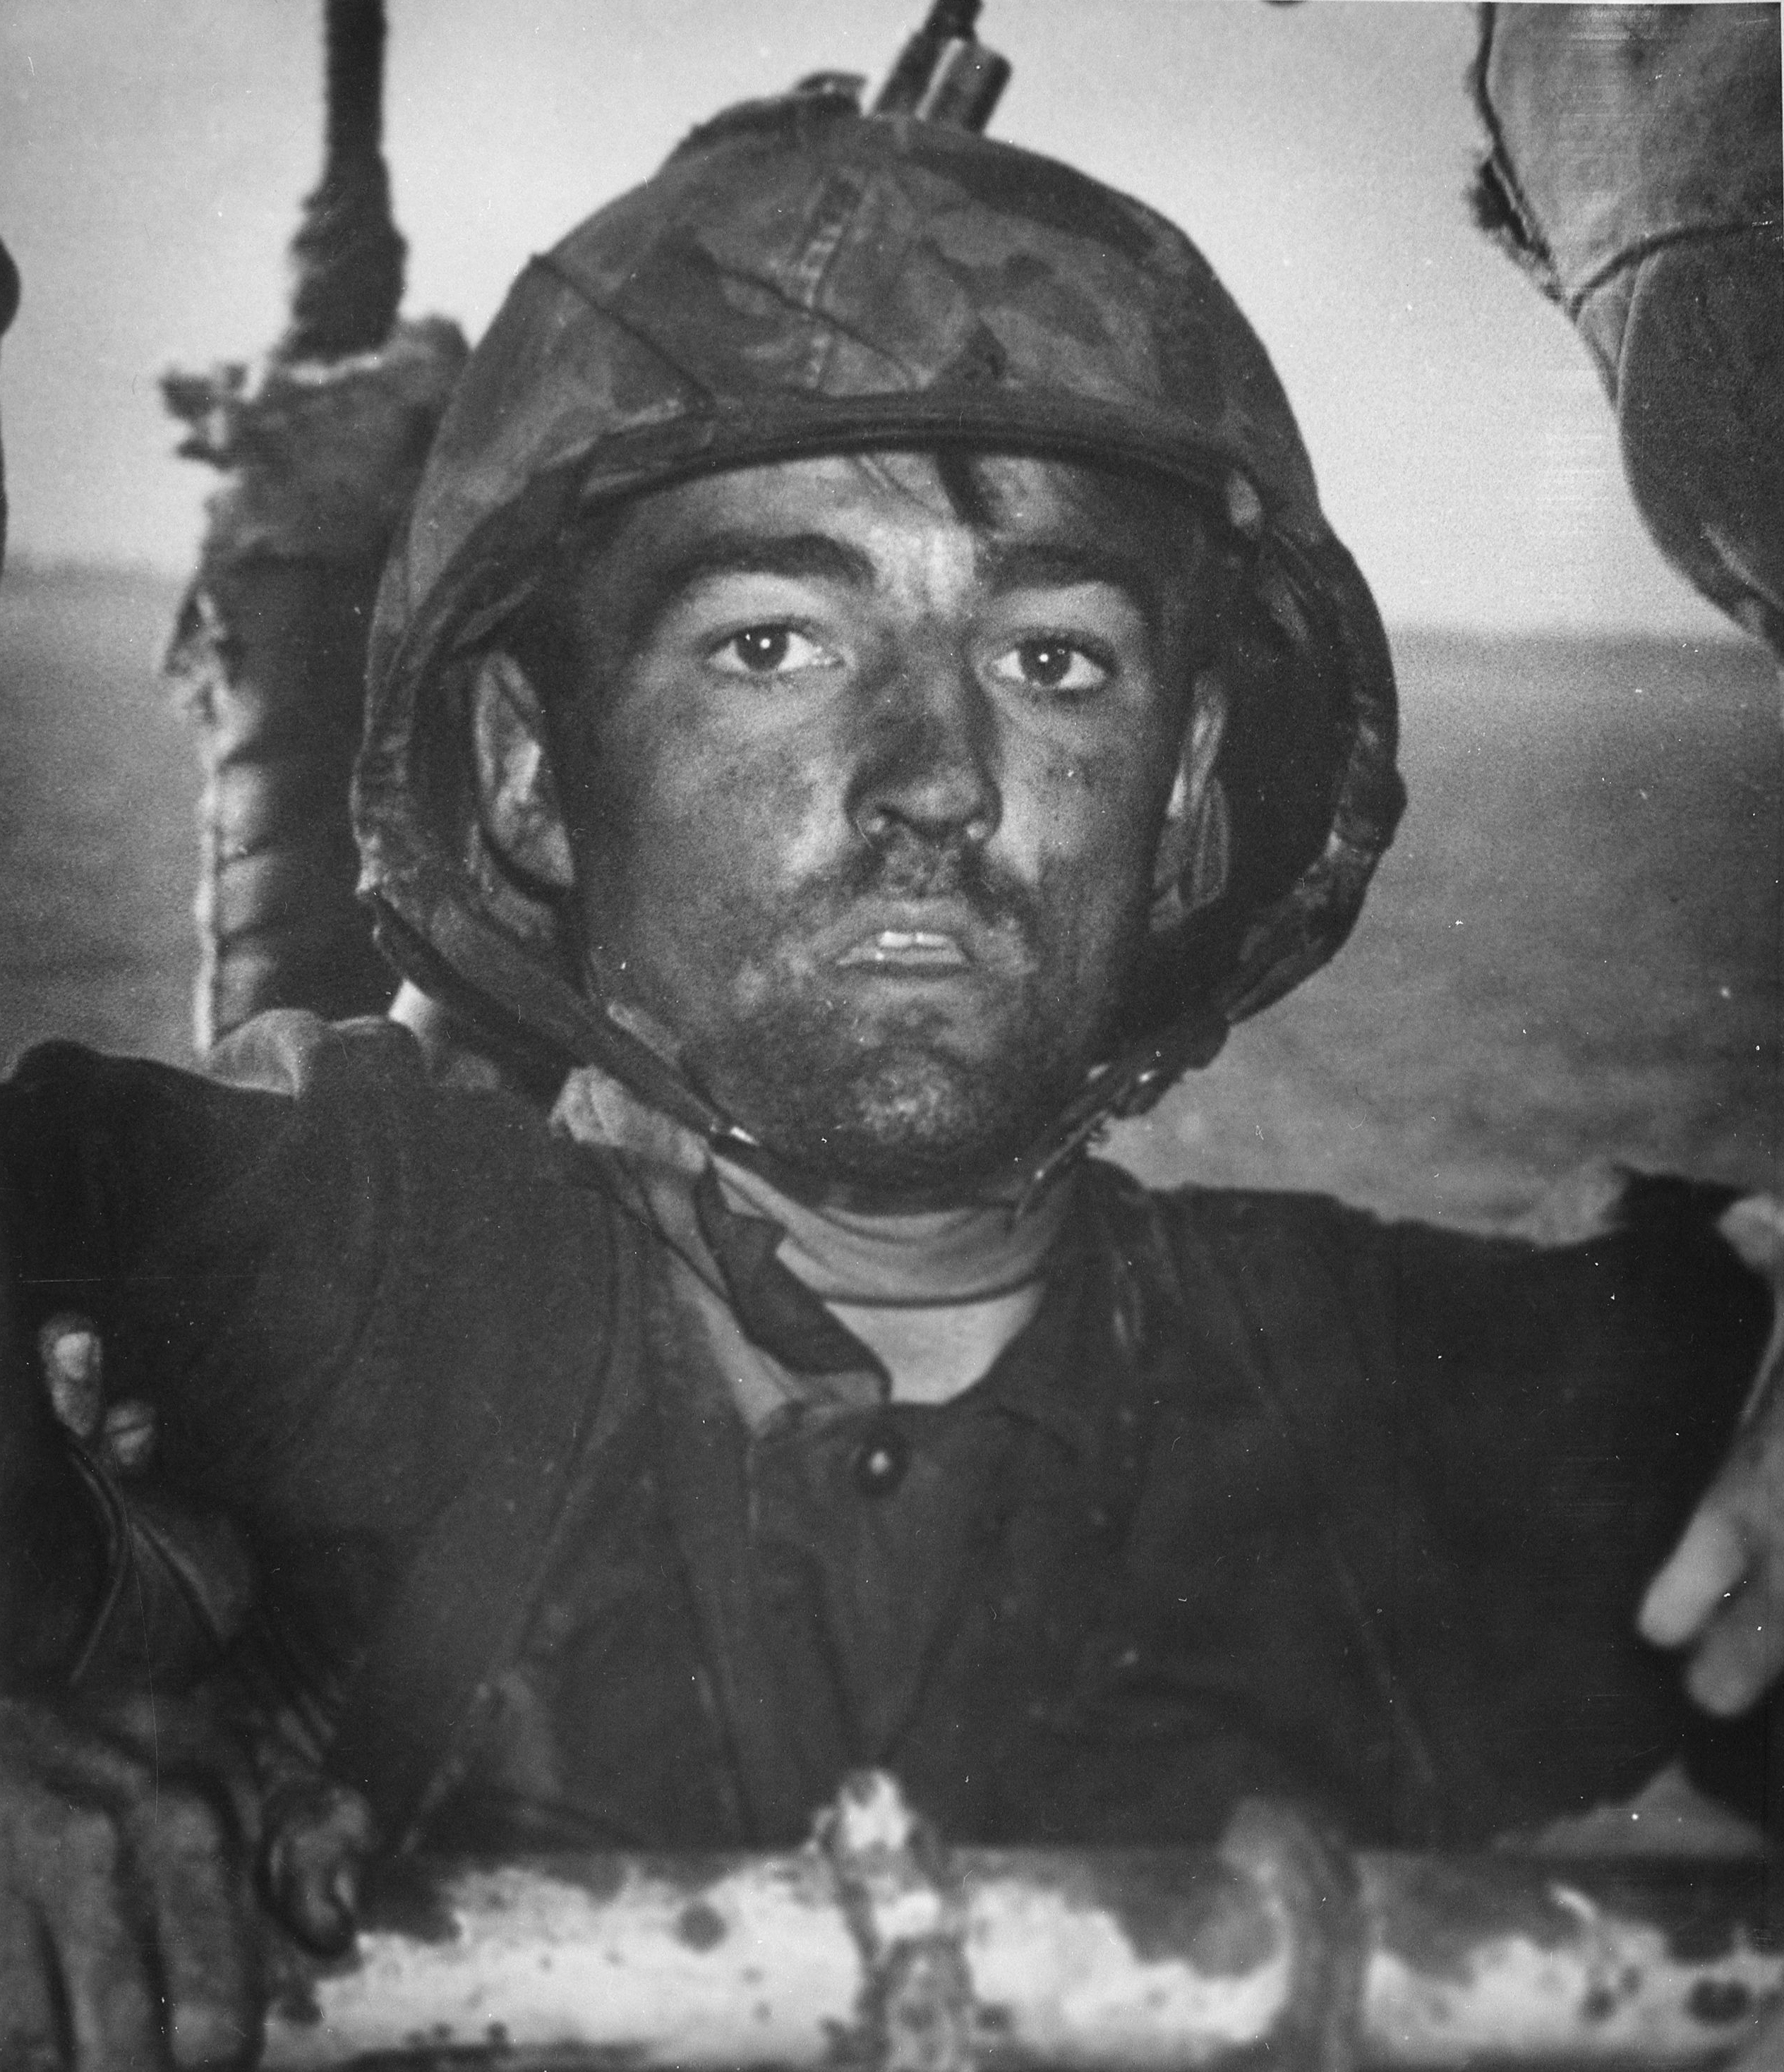 WW2_Marine_after_Eniwetok_assault.jpg